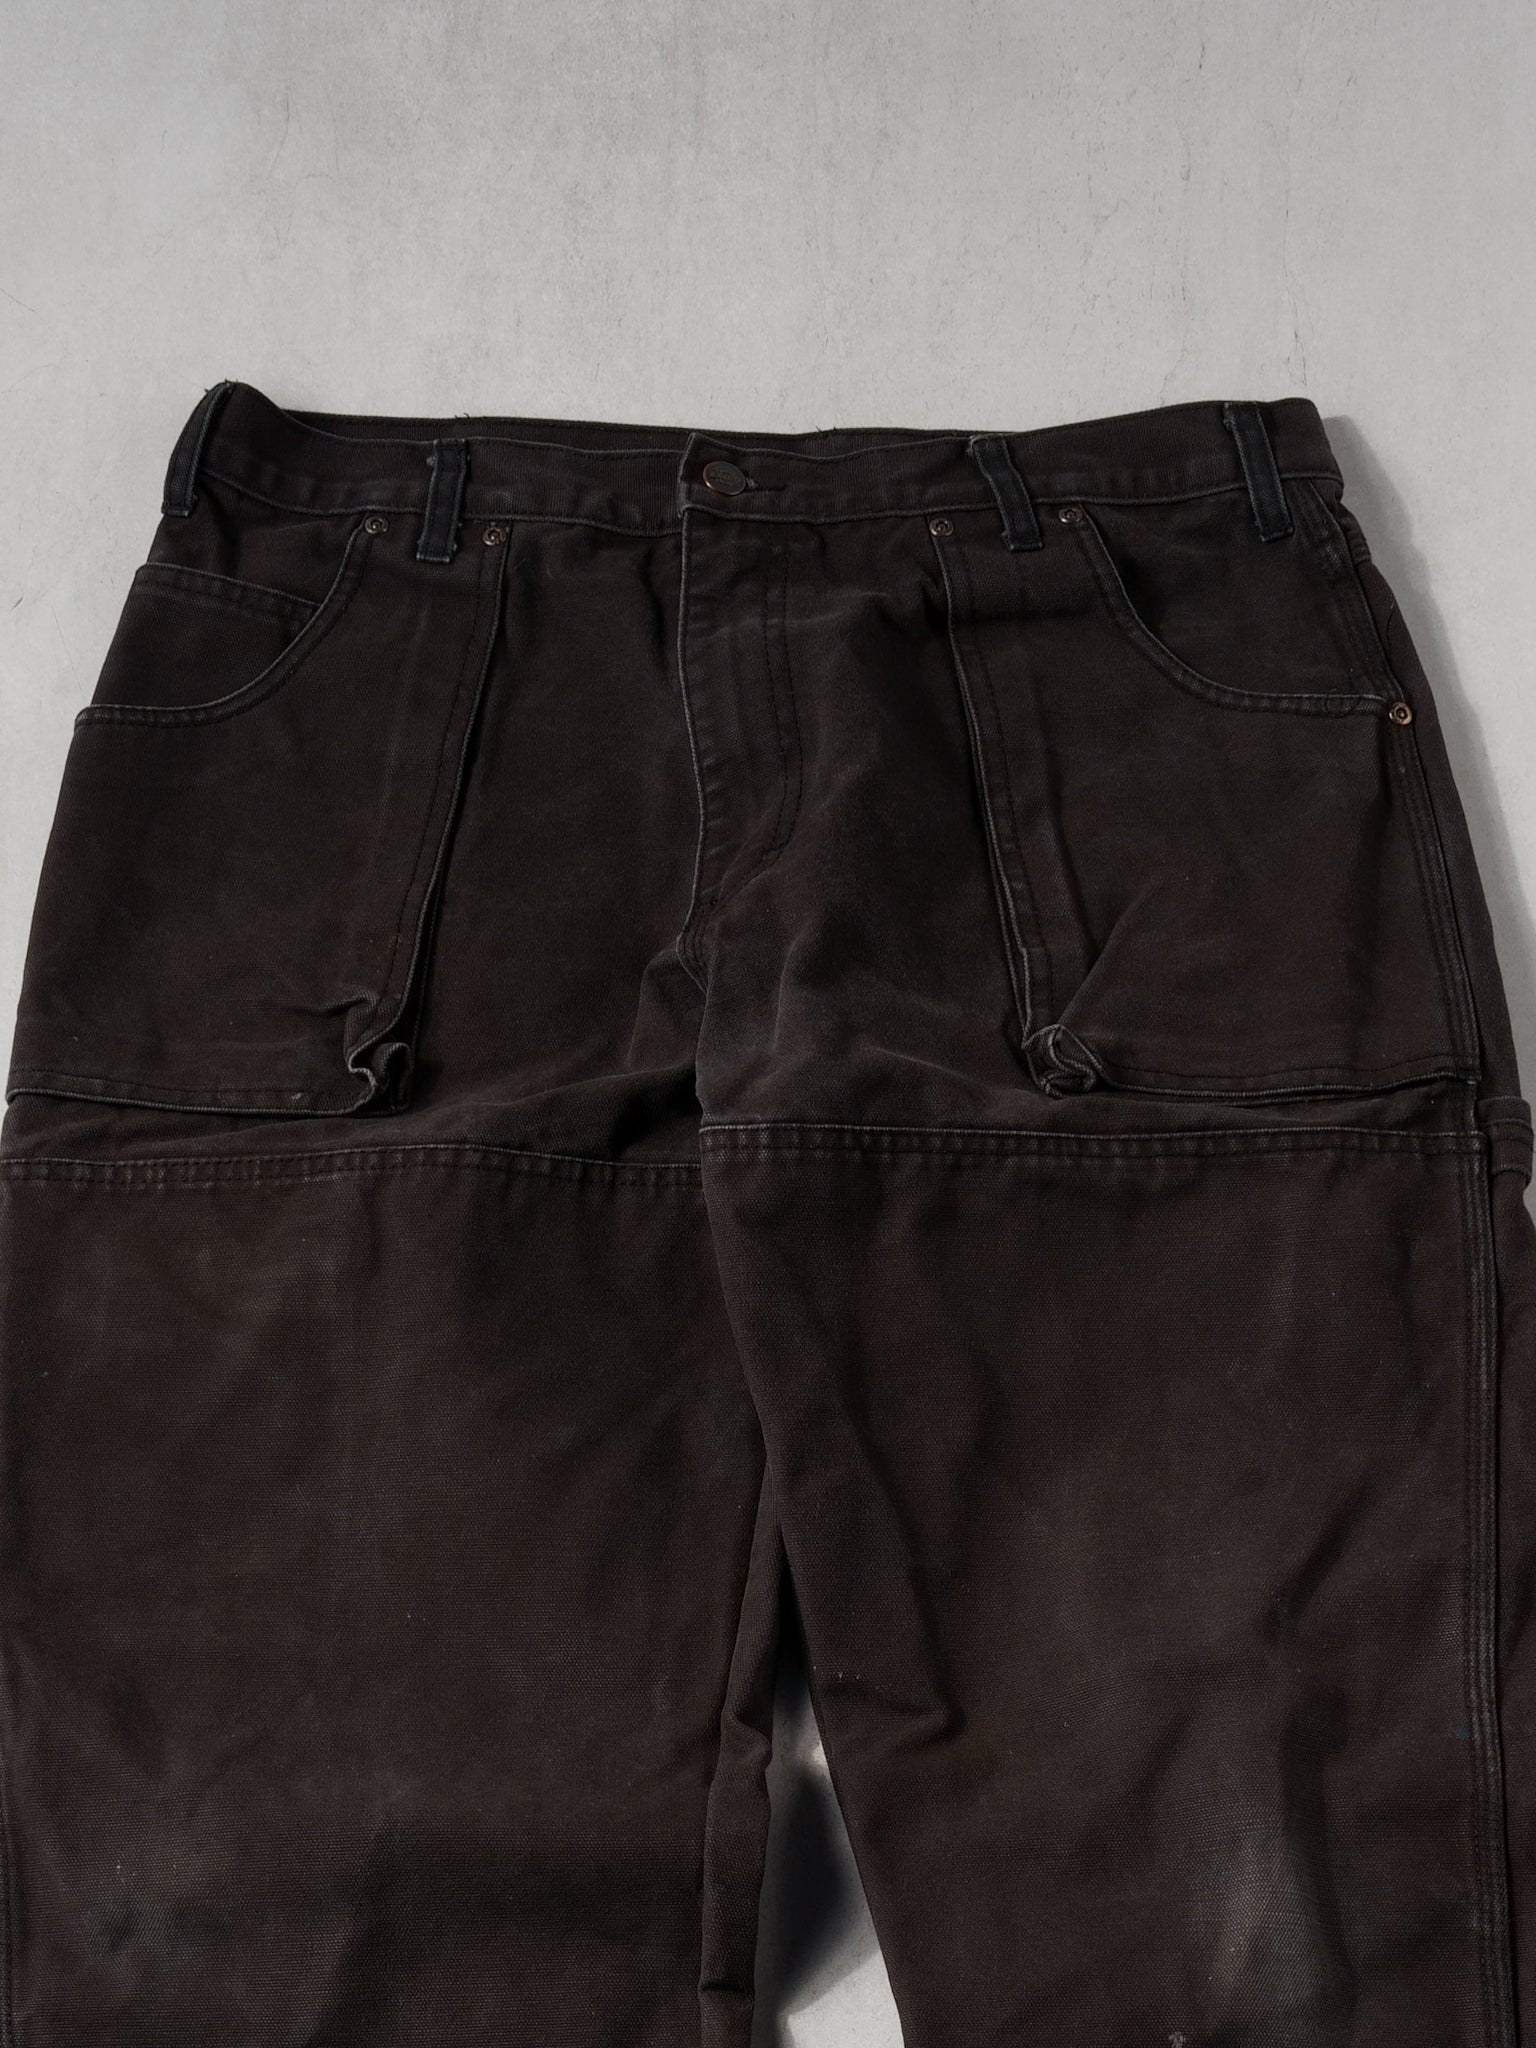 Vintage 90s Washed Black Dickies Double Knee Carpenter Pants (36x30)